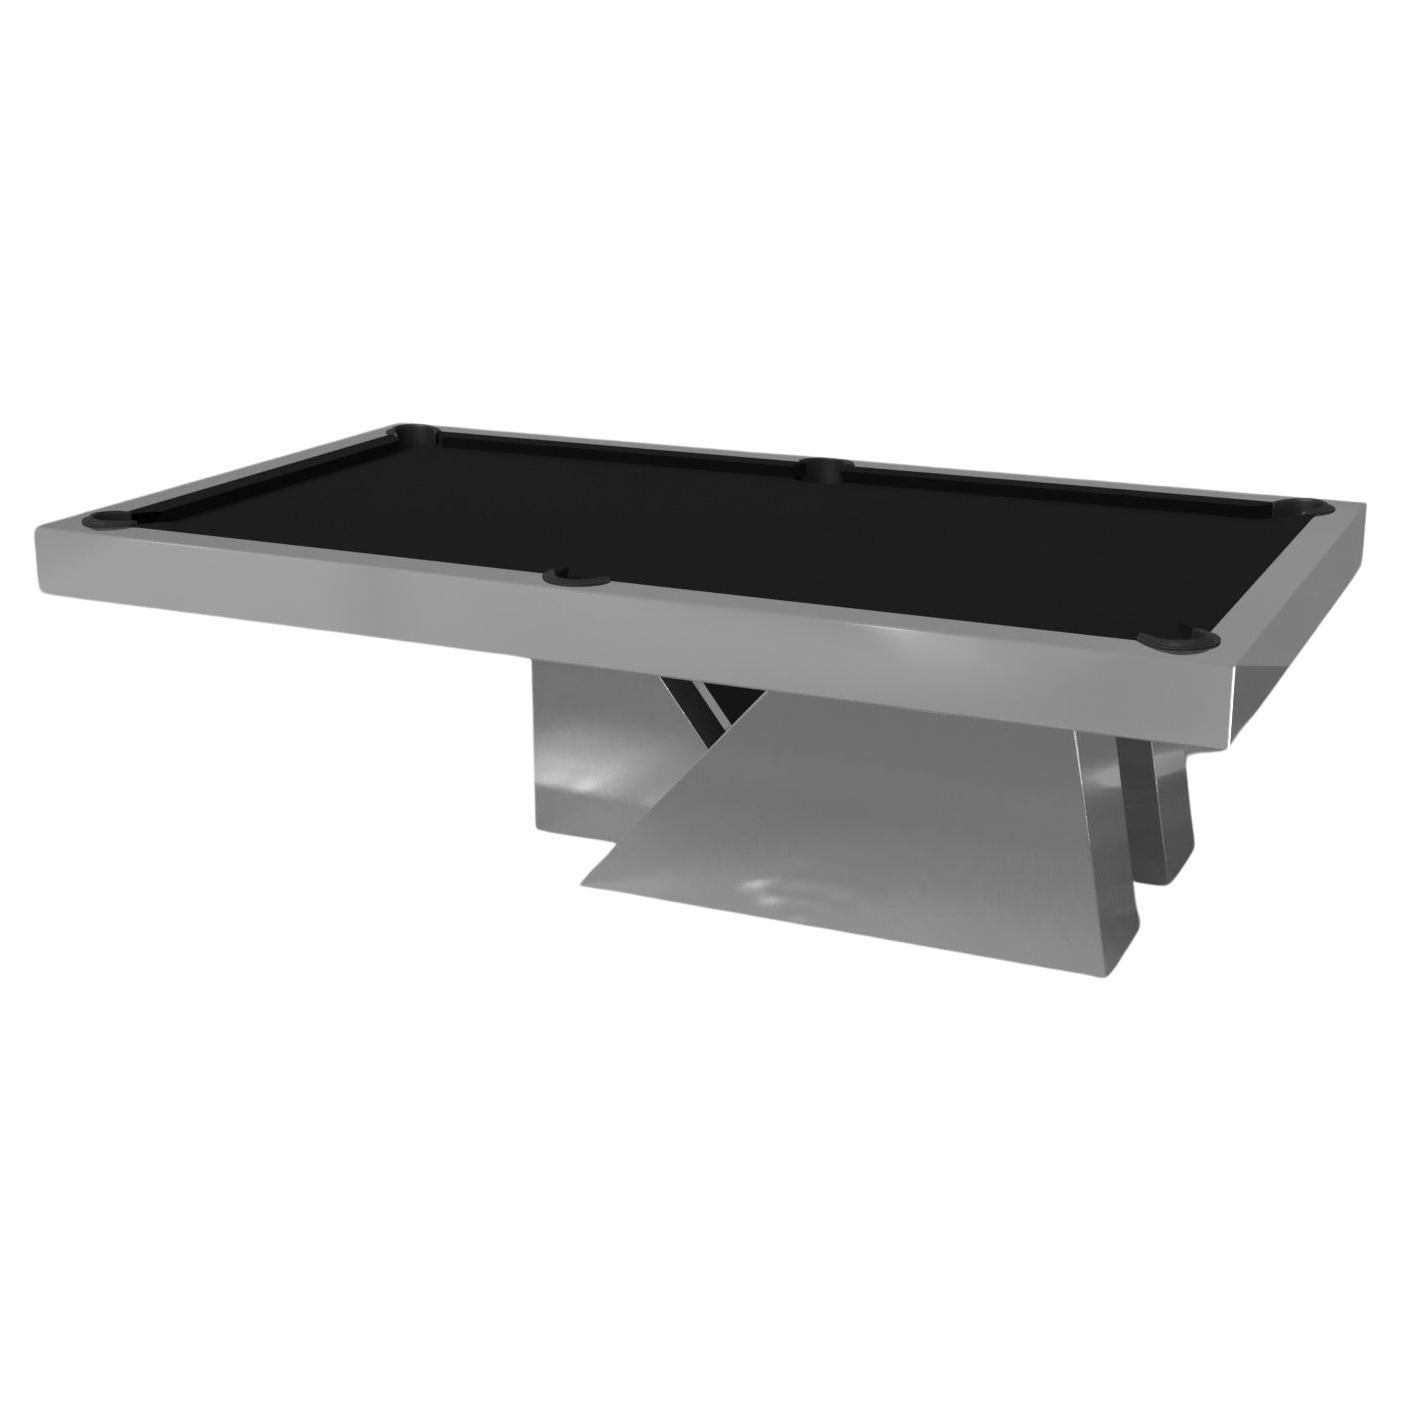 Elevate Customs Stilt Pool Table / Stainless Steel Metal in 8.5' - Made in USA